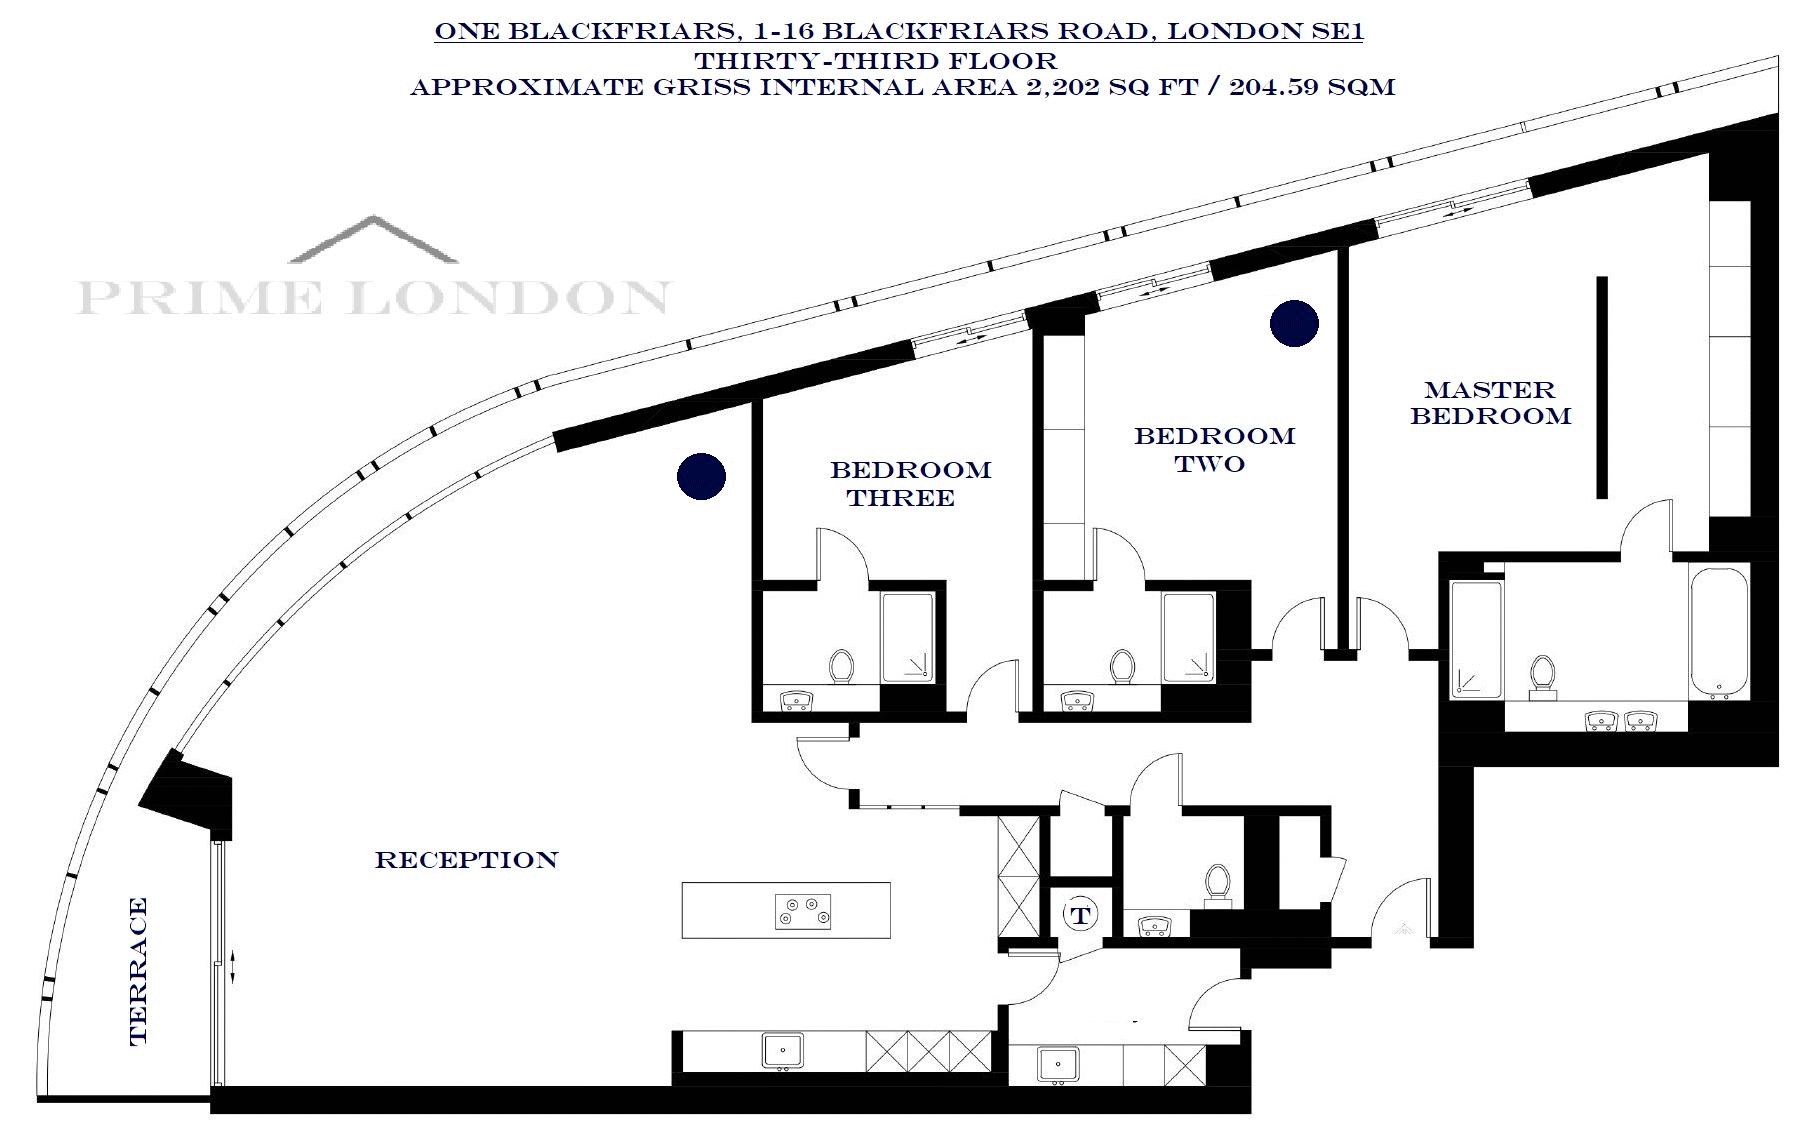 3 Bedrooms Flat for sale in One Blackfriars, 1-16 Blackfriars Road, London SE1